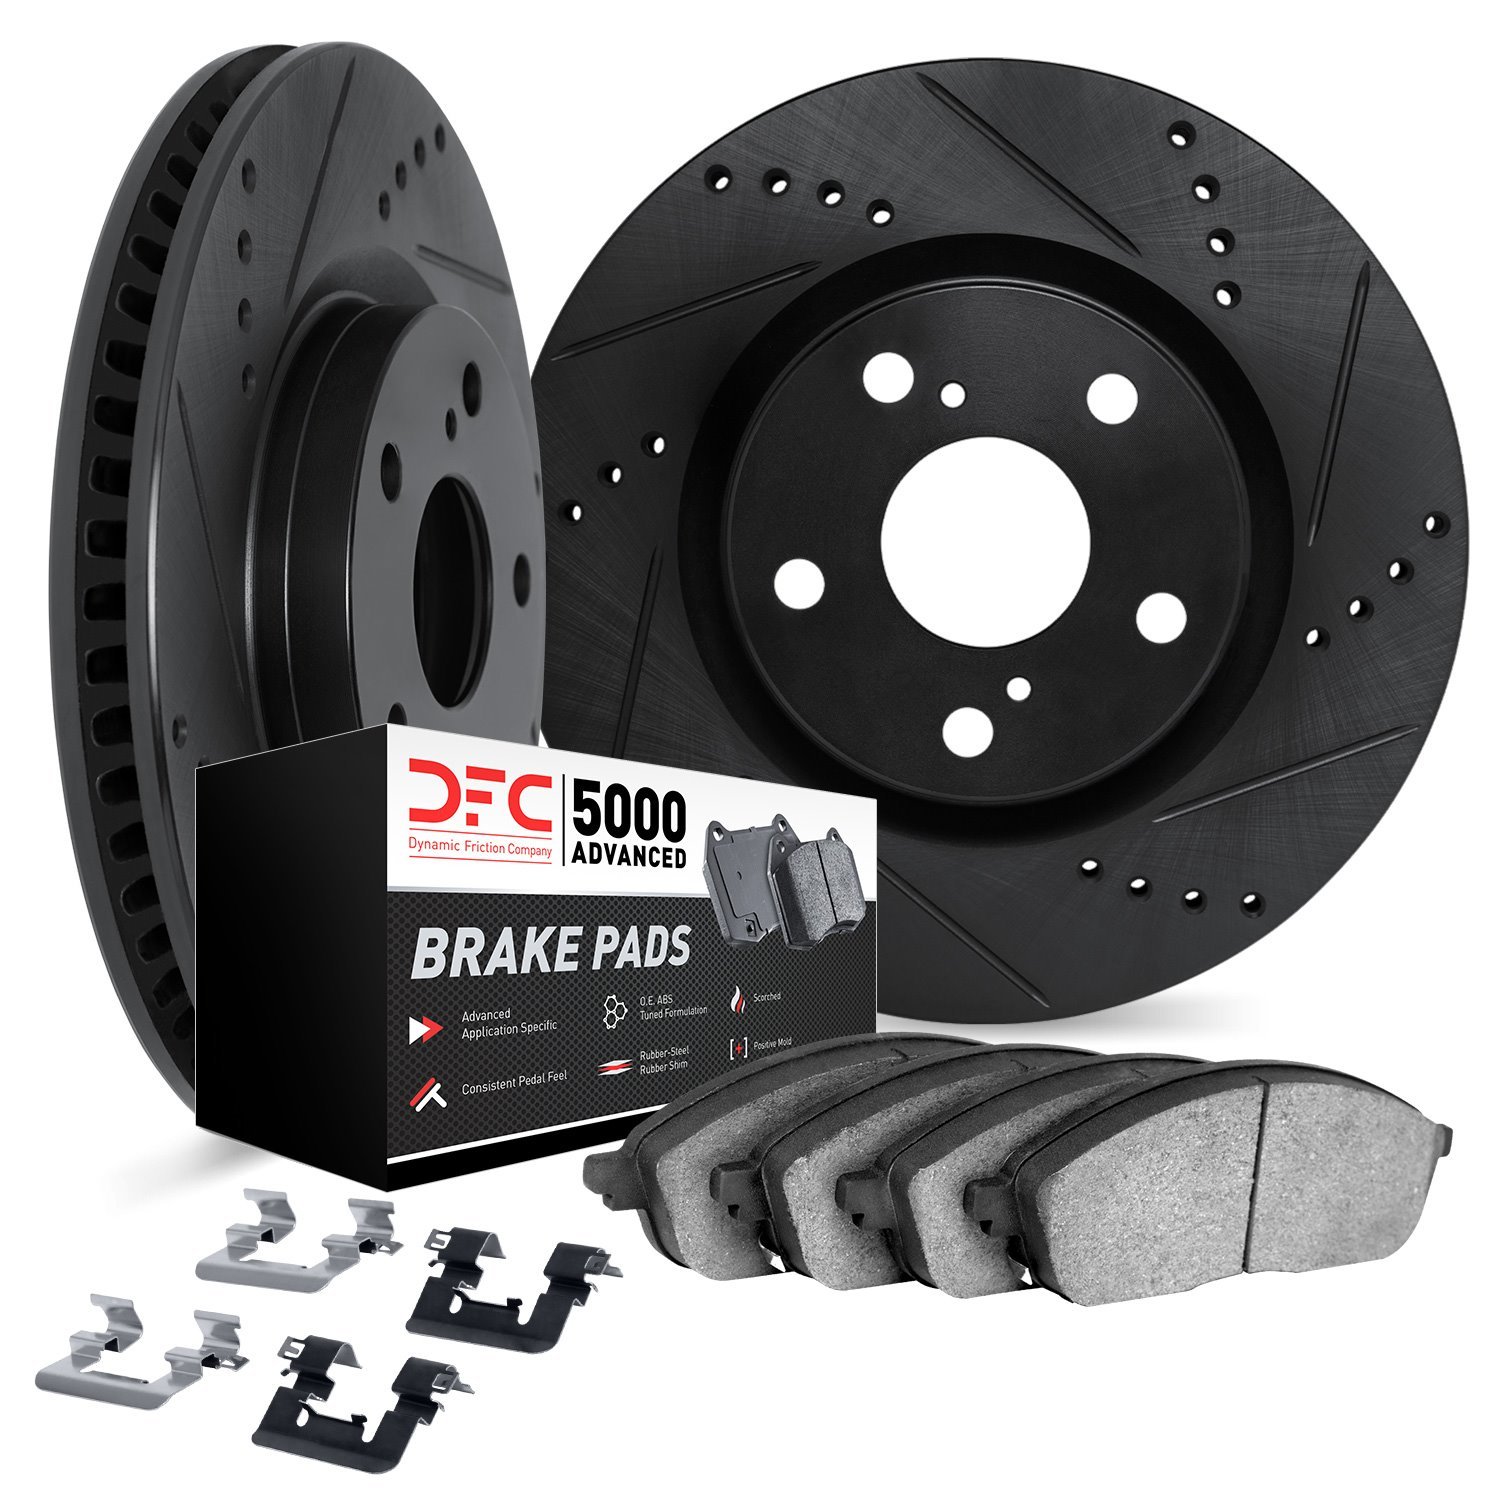 8512-31166 Drilled/Slotted Brake Rotors w/5000 Advanced Brake Pads Kit & Hardware [Black], Fits Select Multiple Makes/Models, Po